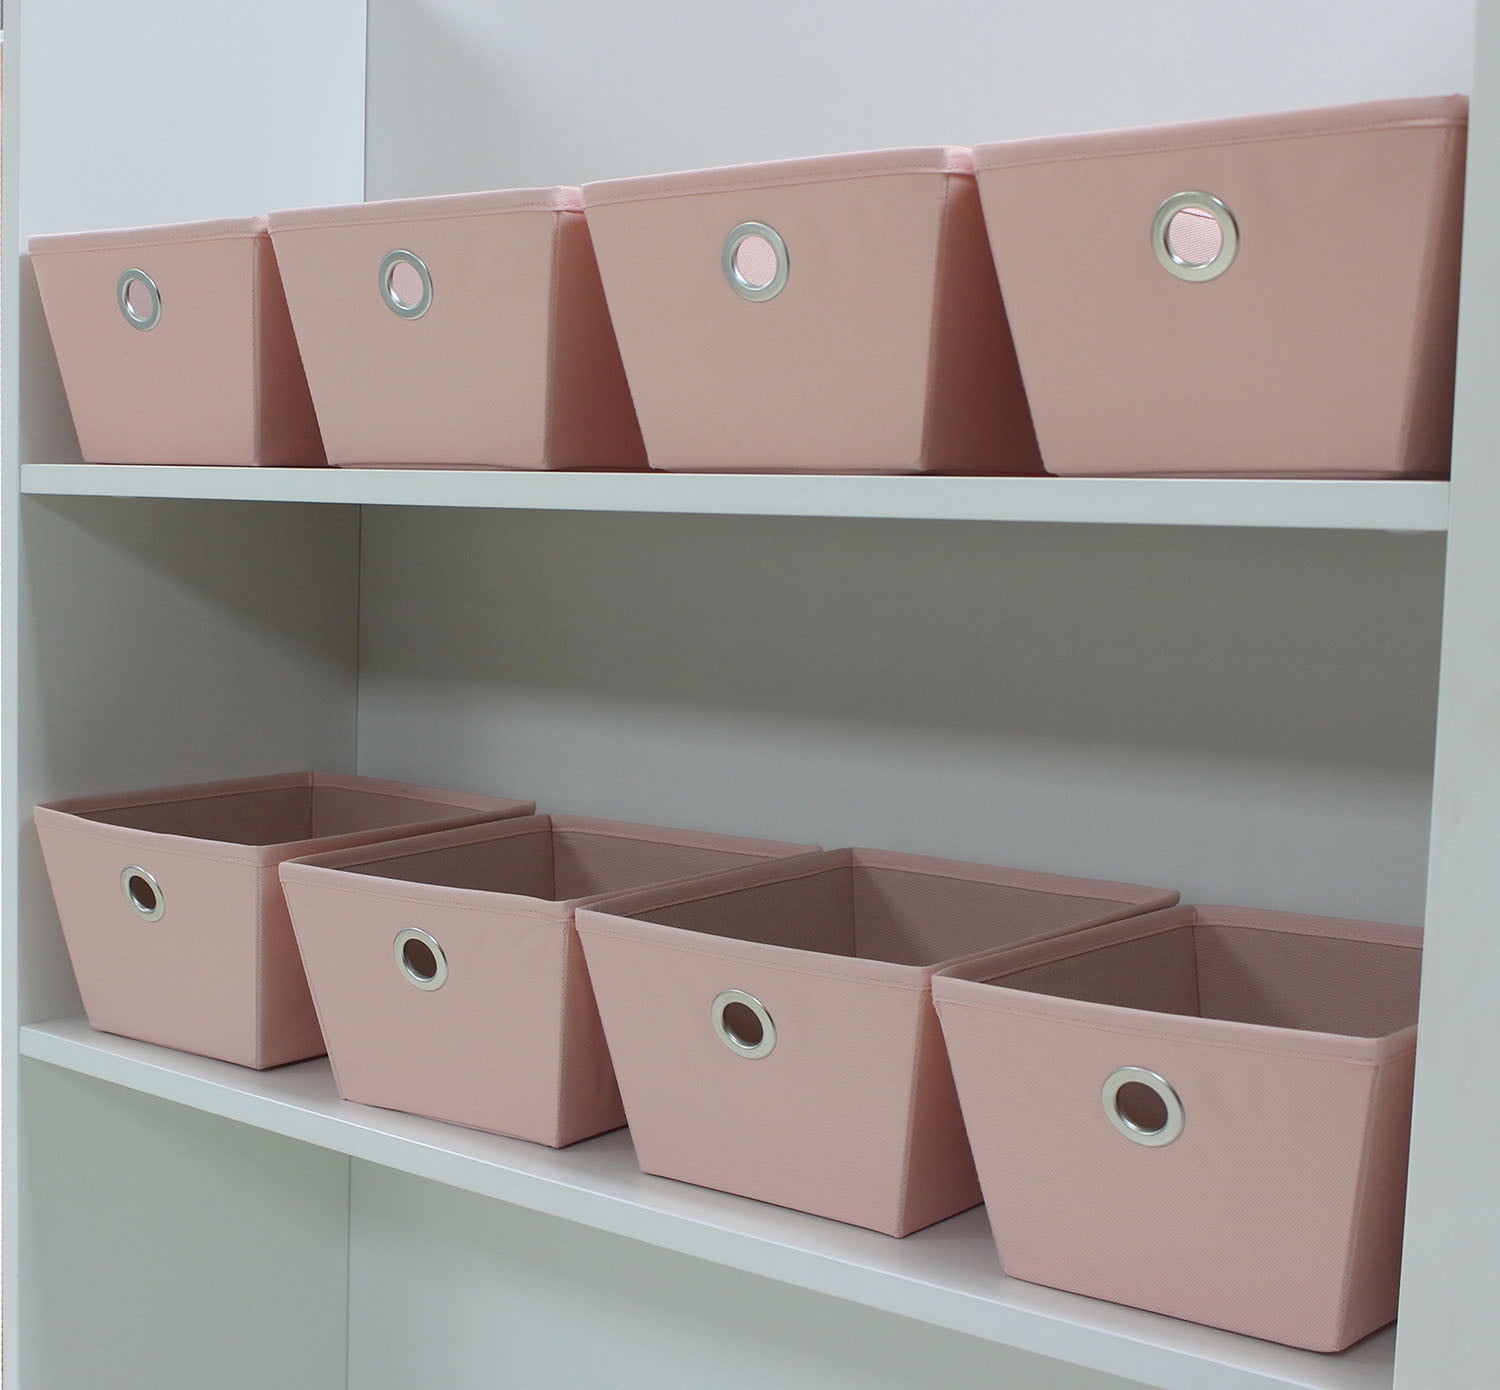 Blush Pink Medium Weave Plastic Storage Container, 13 x 10 x 5 Inches, Mardel